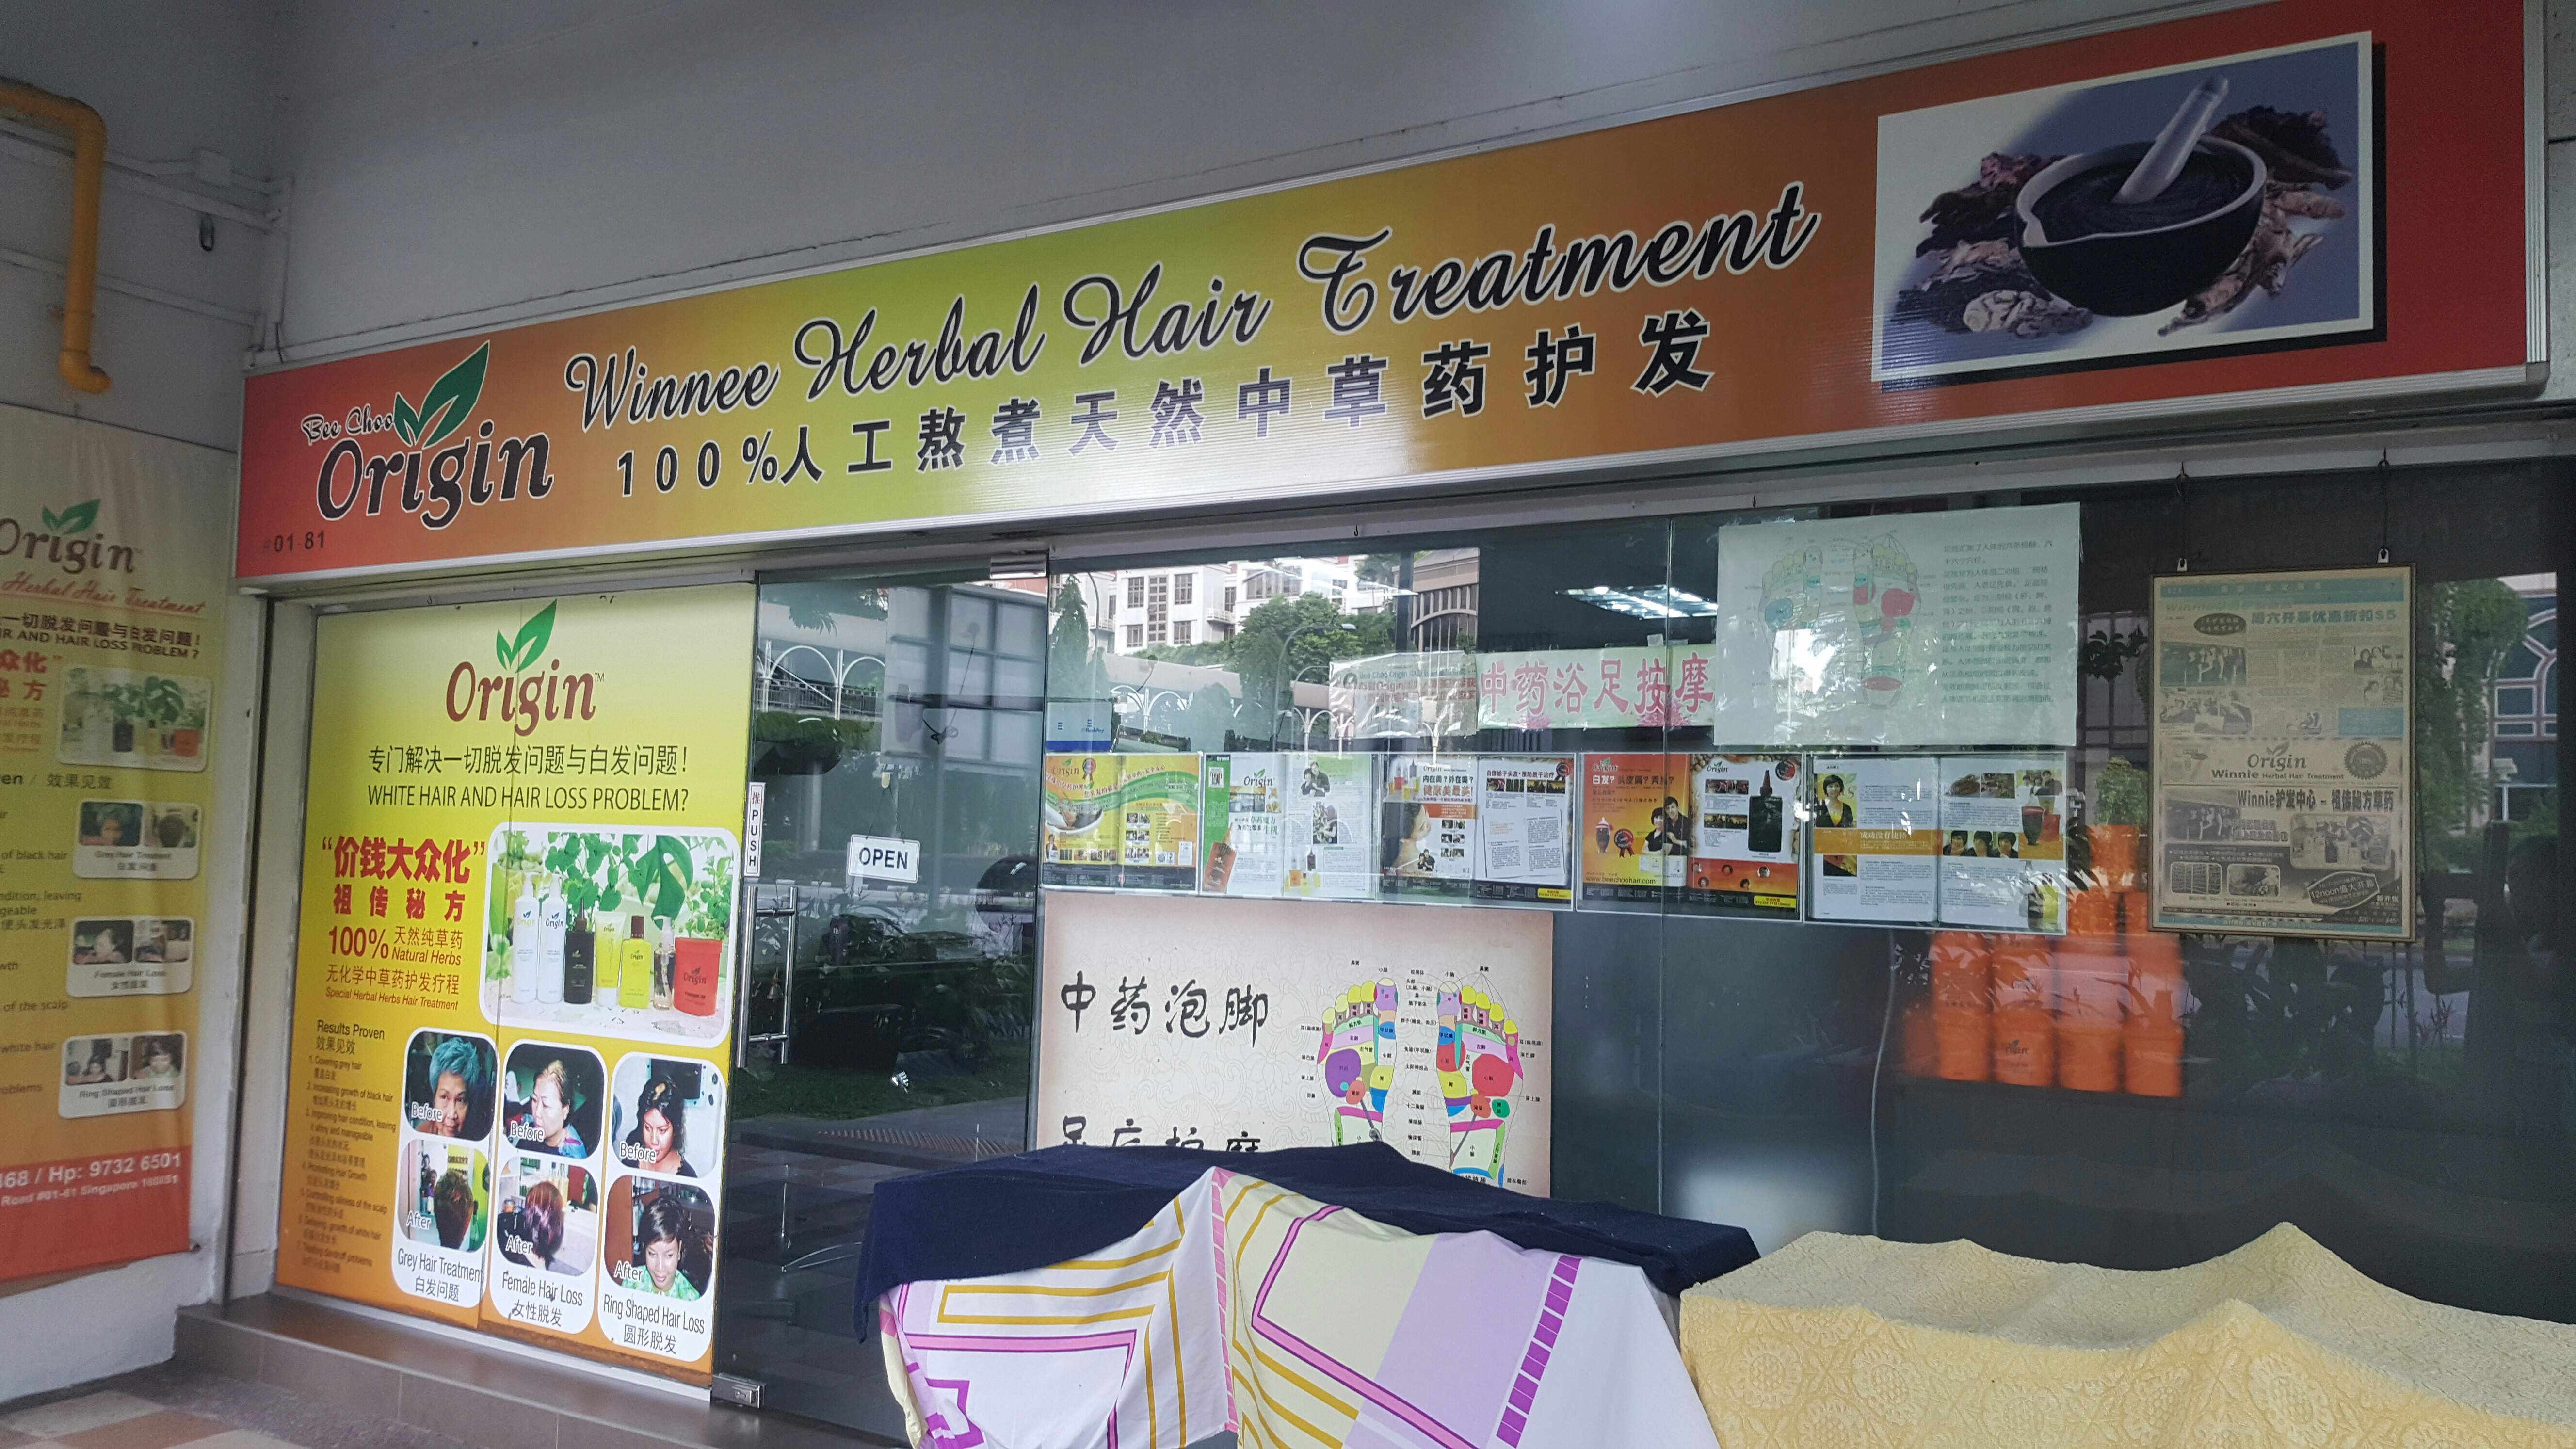 Singapore Service - Hair Salon - Winnee Herbal Hair Treatment | Nestia